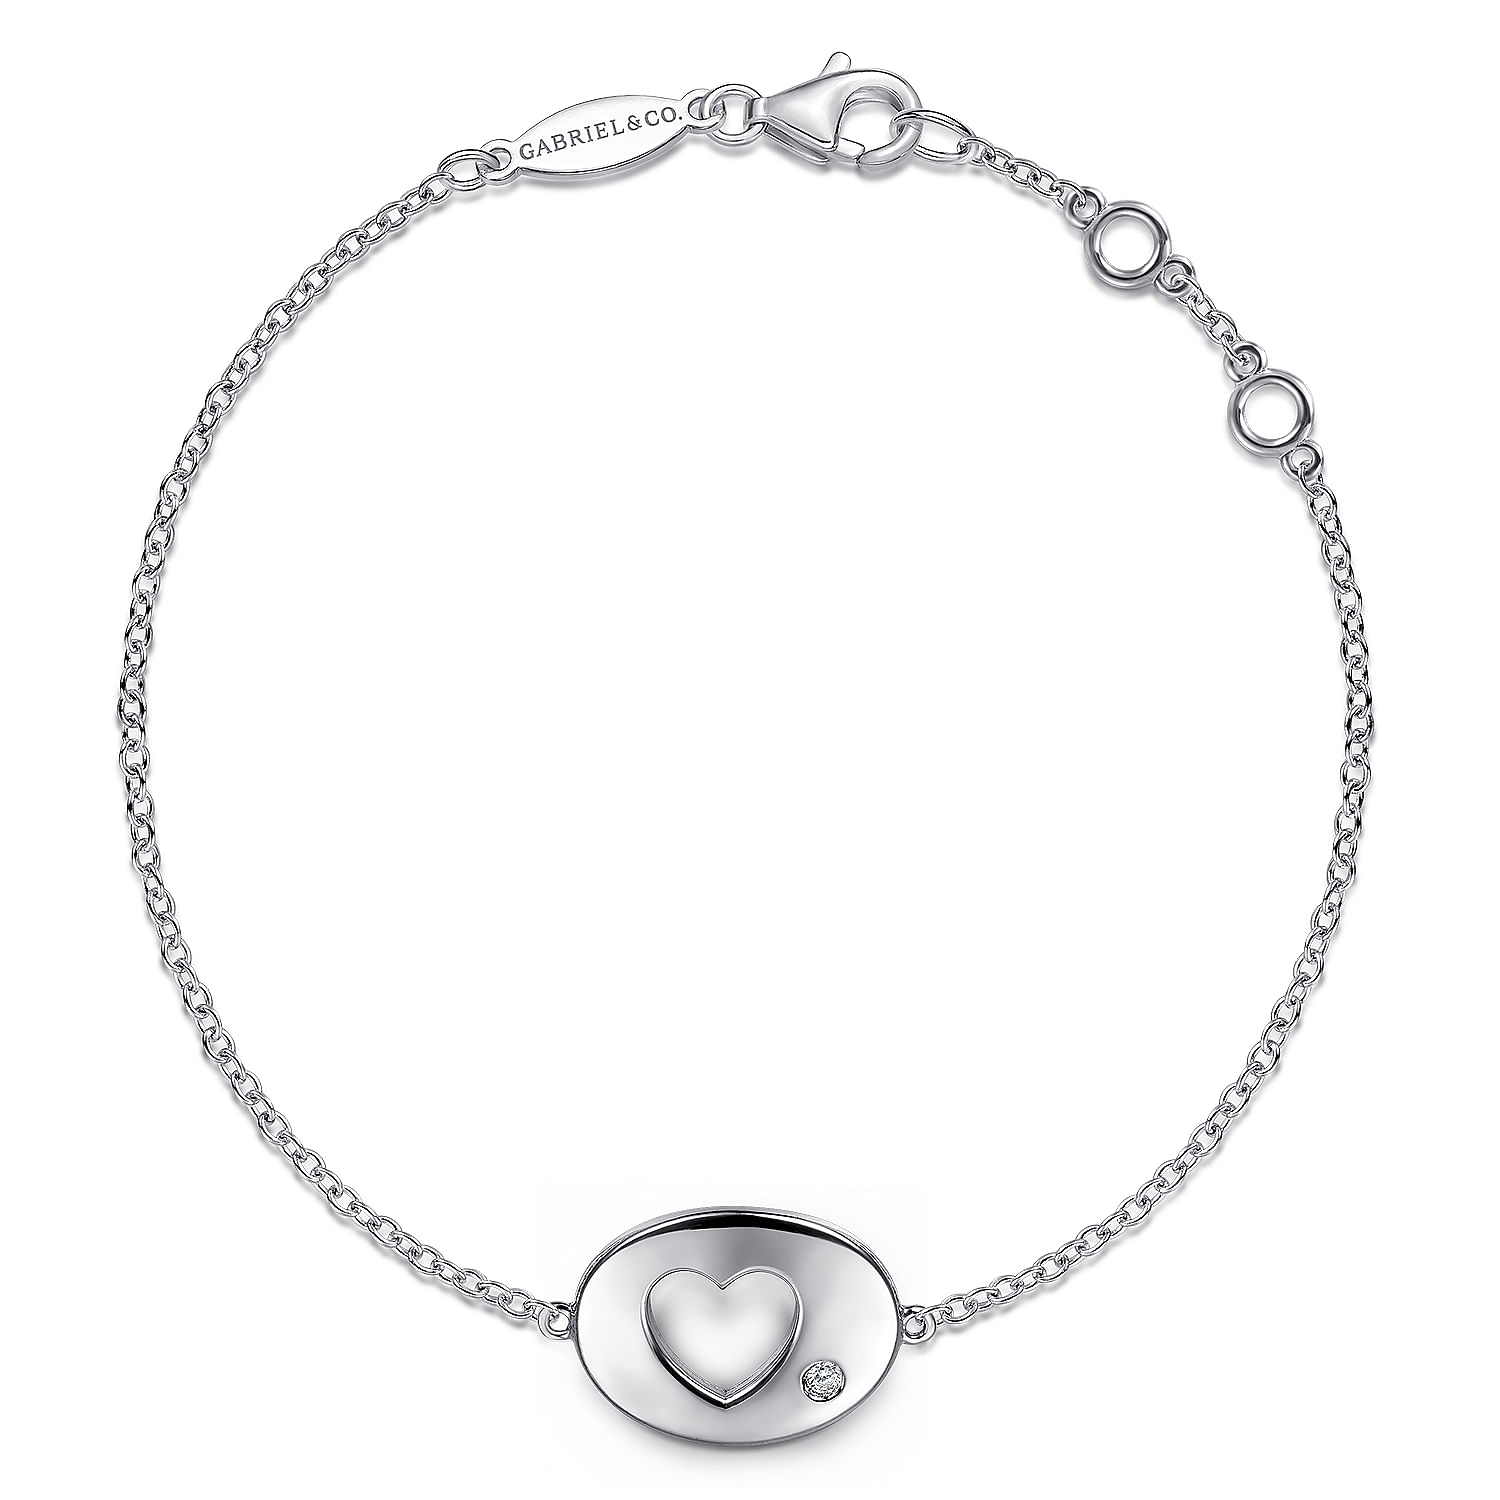 Gabriel - 925 Sterling Silver Chain Bracelet with Diamond Cutout Heart Charm